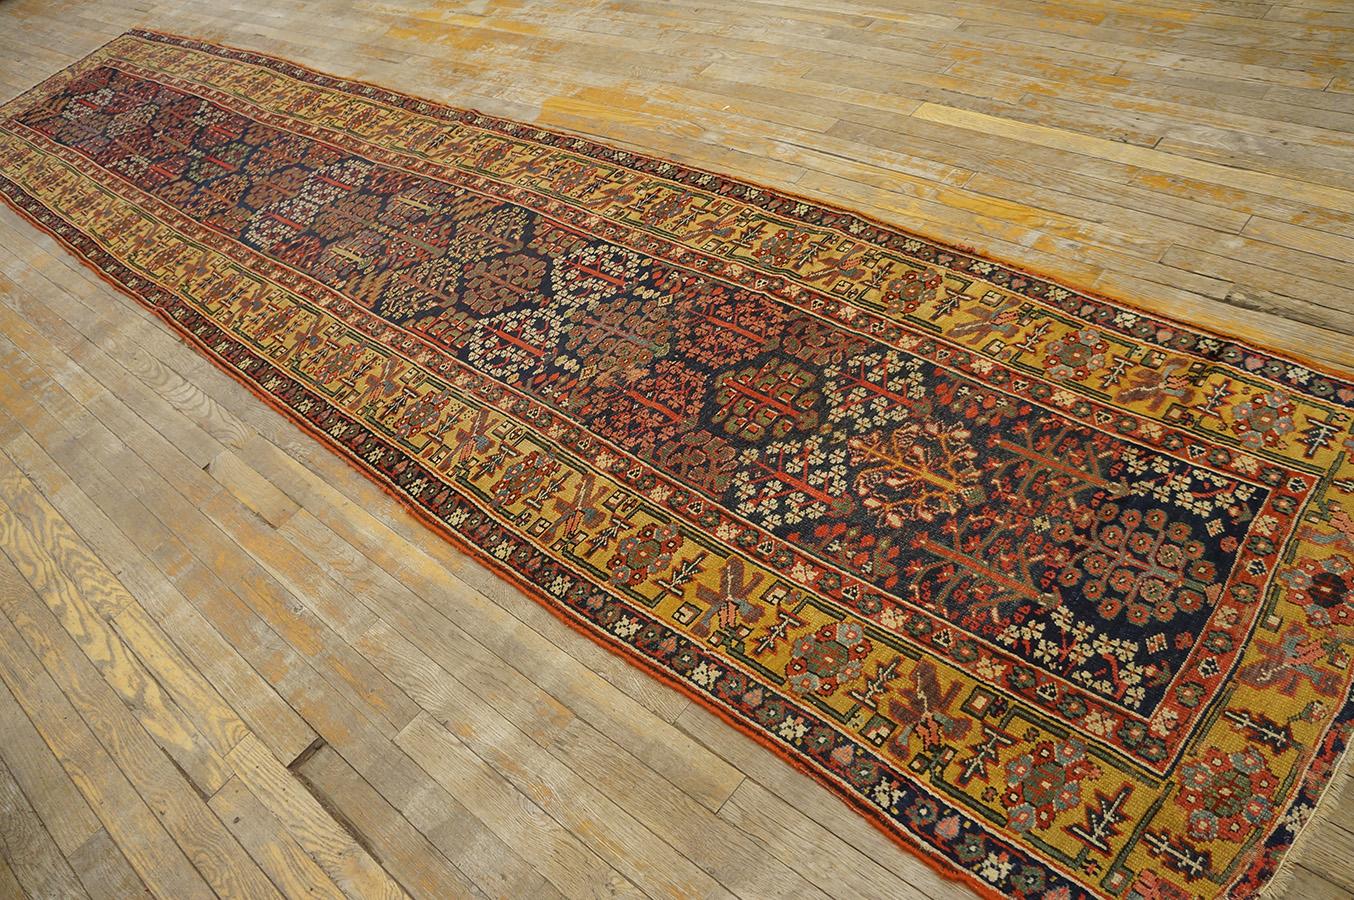 Mid 19th Century W. Persian Kurdish Shrub Runner Carpet (3' x 14'6'' - 90 x 443) For Sale 7